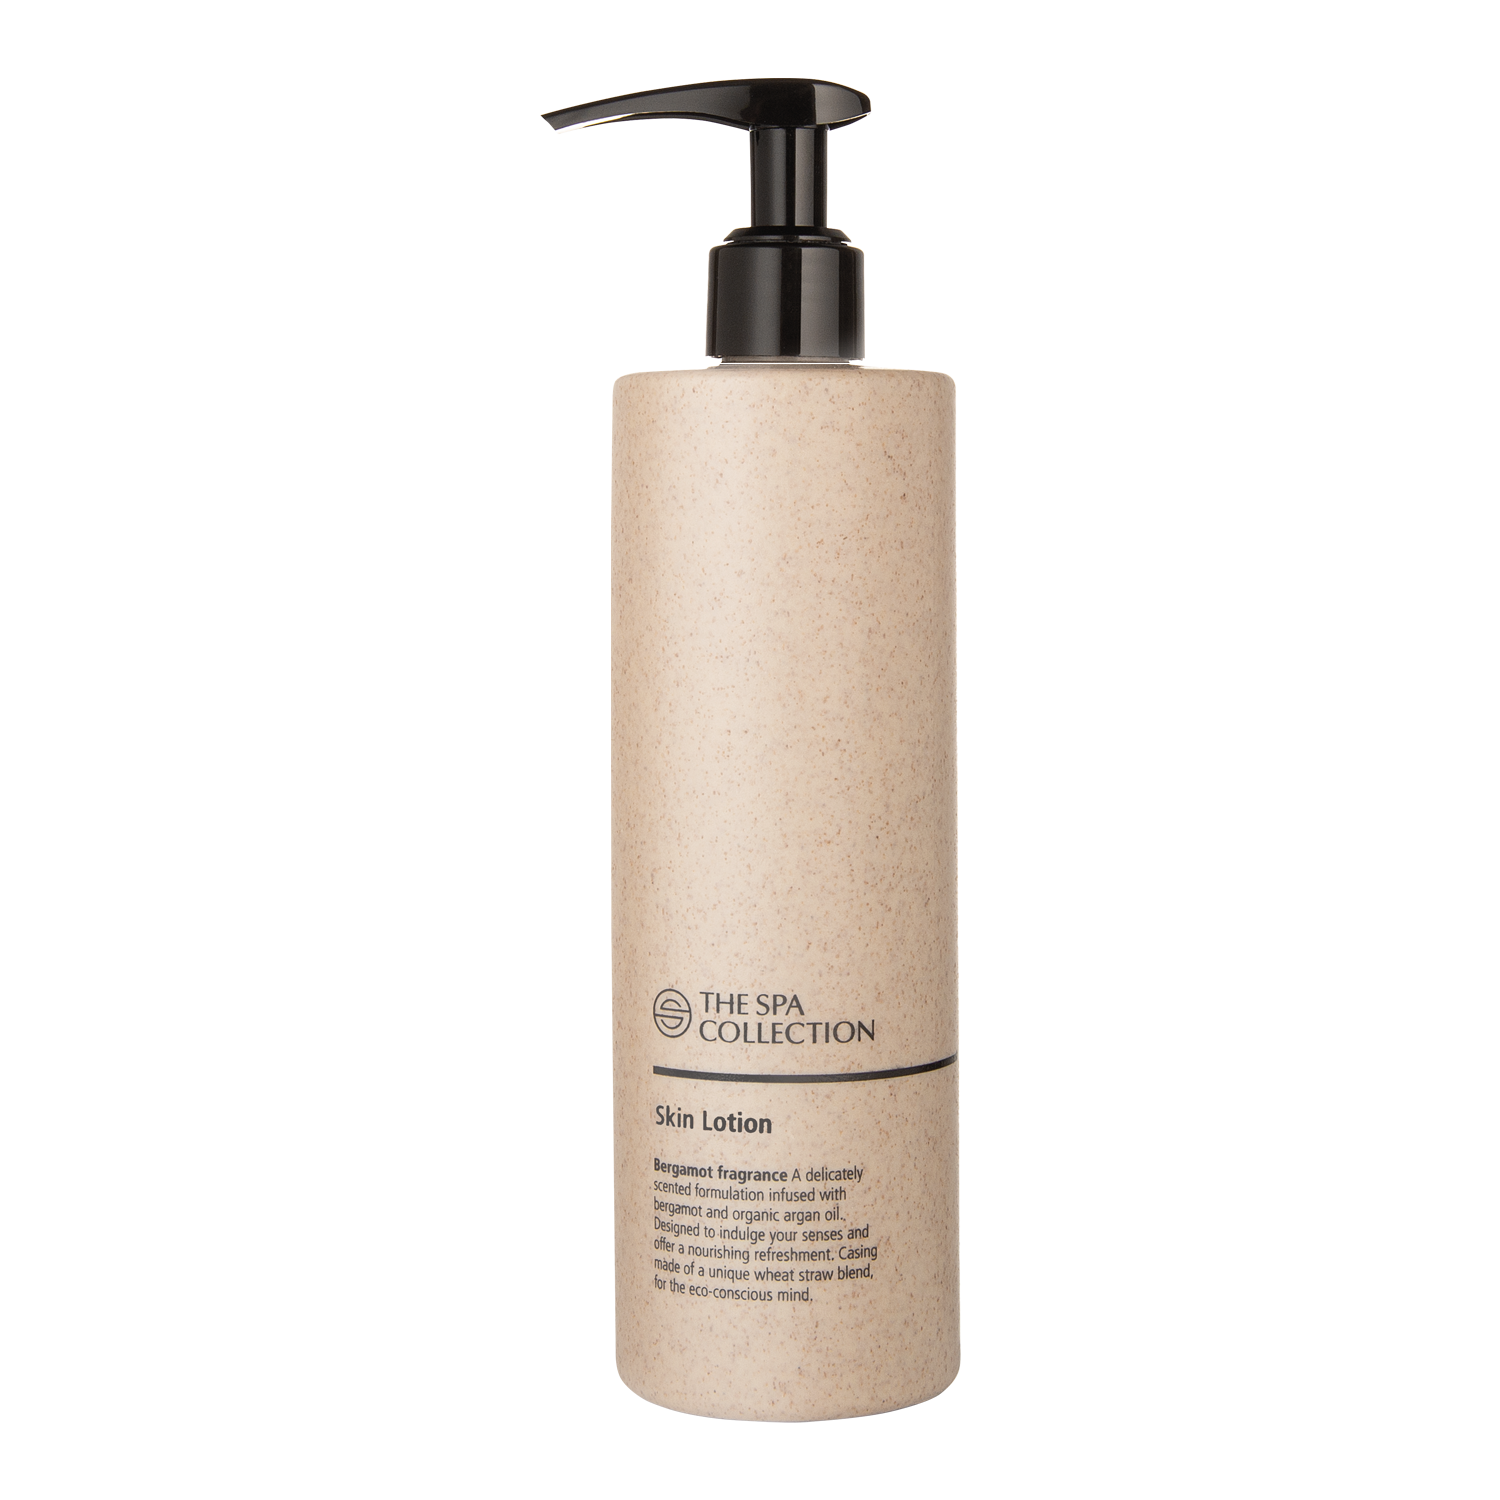 Skin lotion - 400ml wheatstraw bottle - The Spa Collection Bergamot